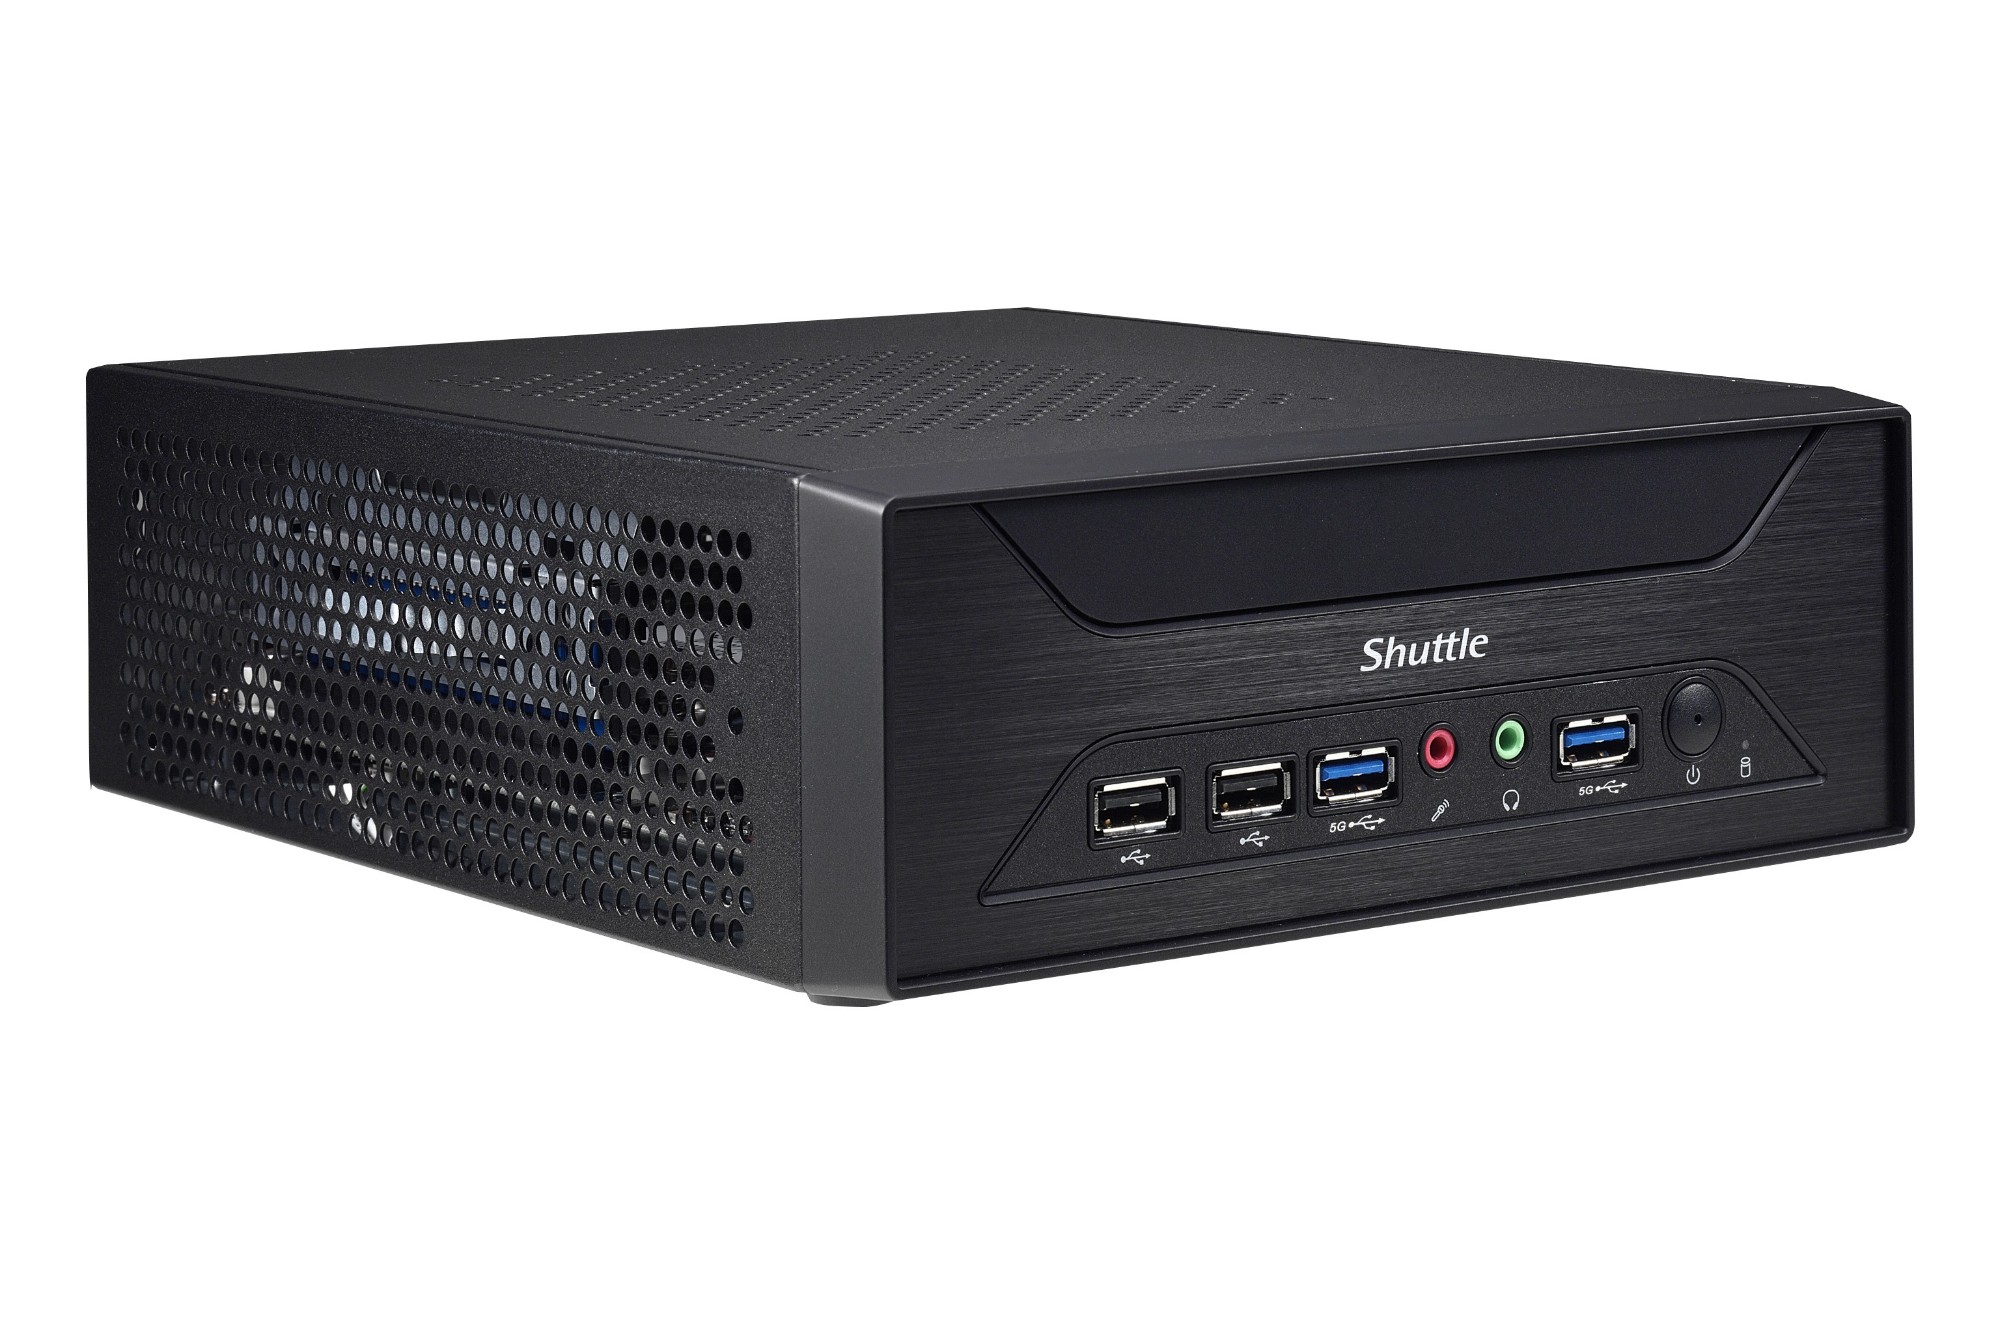 Shuttle XPC slim Barebone XH510G - S1200, Intel H510, 1xDP, 1xHDMI, 1x PCI-E 16X, 1x LAN, 1x 2.5", 2x M.2, 24/7 permanent operation